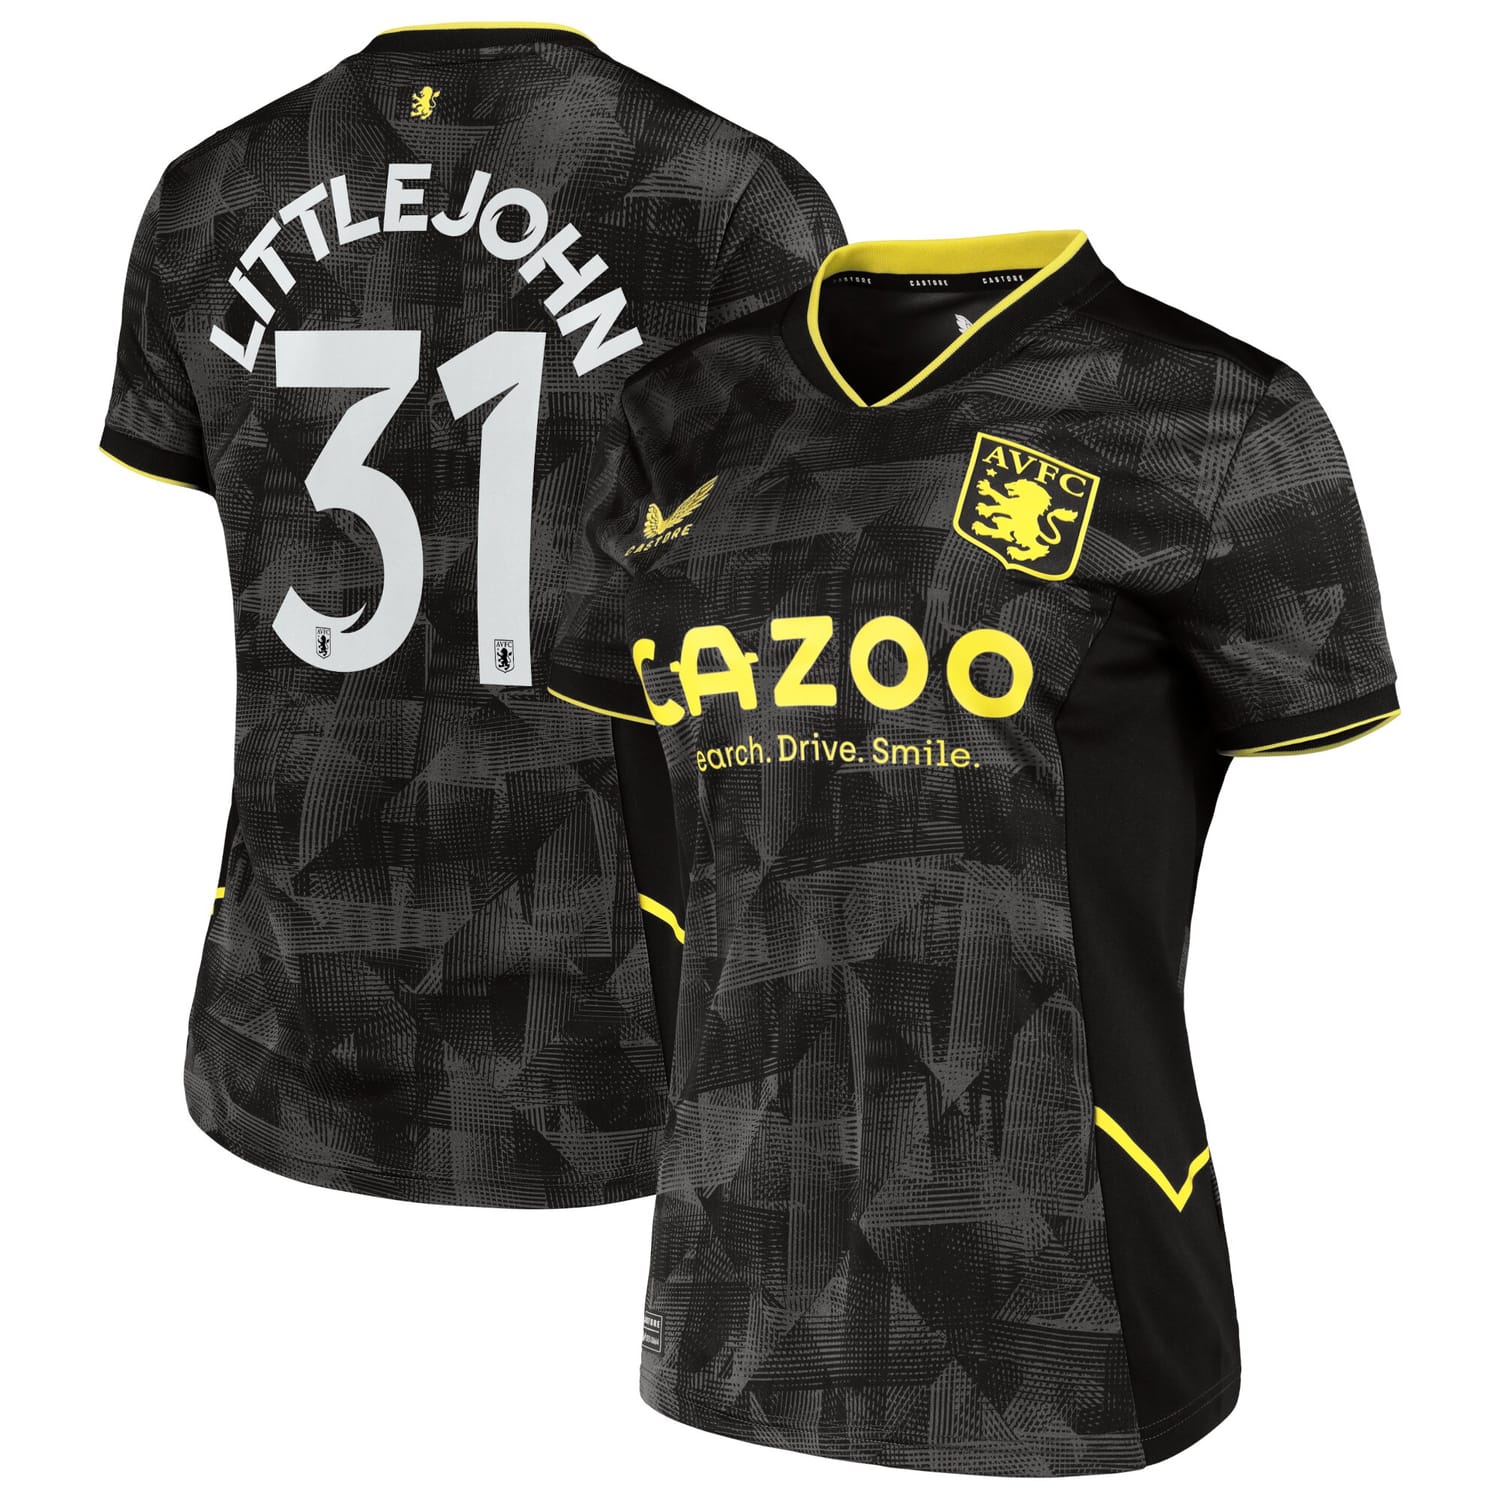 Premier League Aston Villa Third Cup Jersey Shirt 2022-23 player Ruesha Littlejohn 31 printing for Women